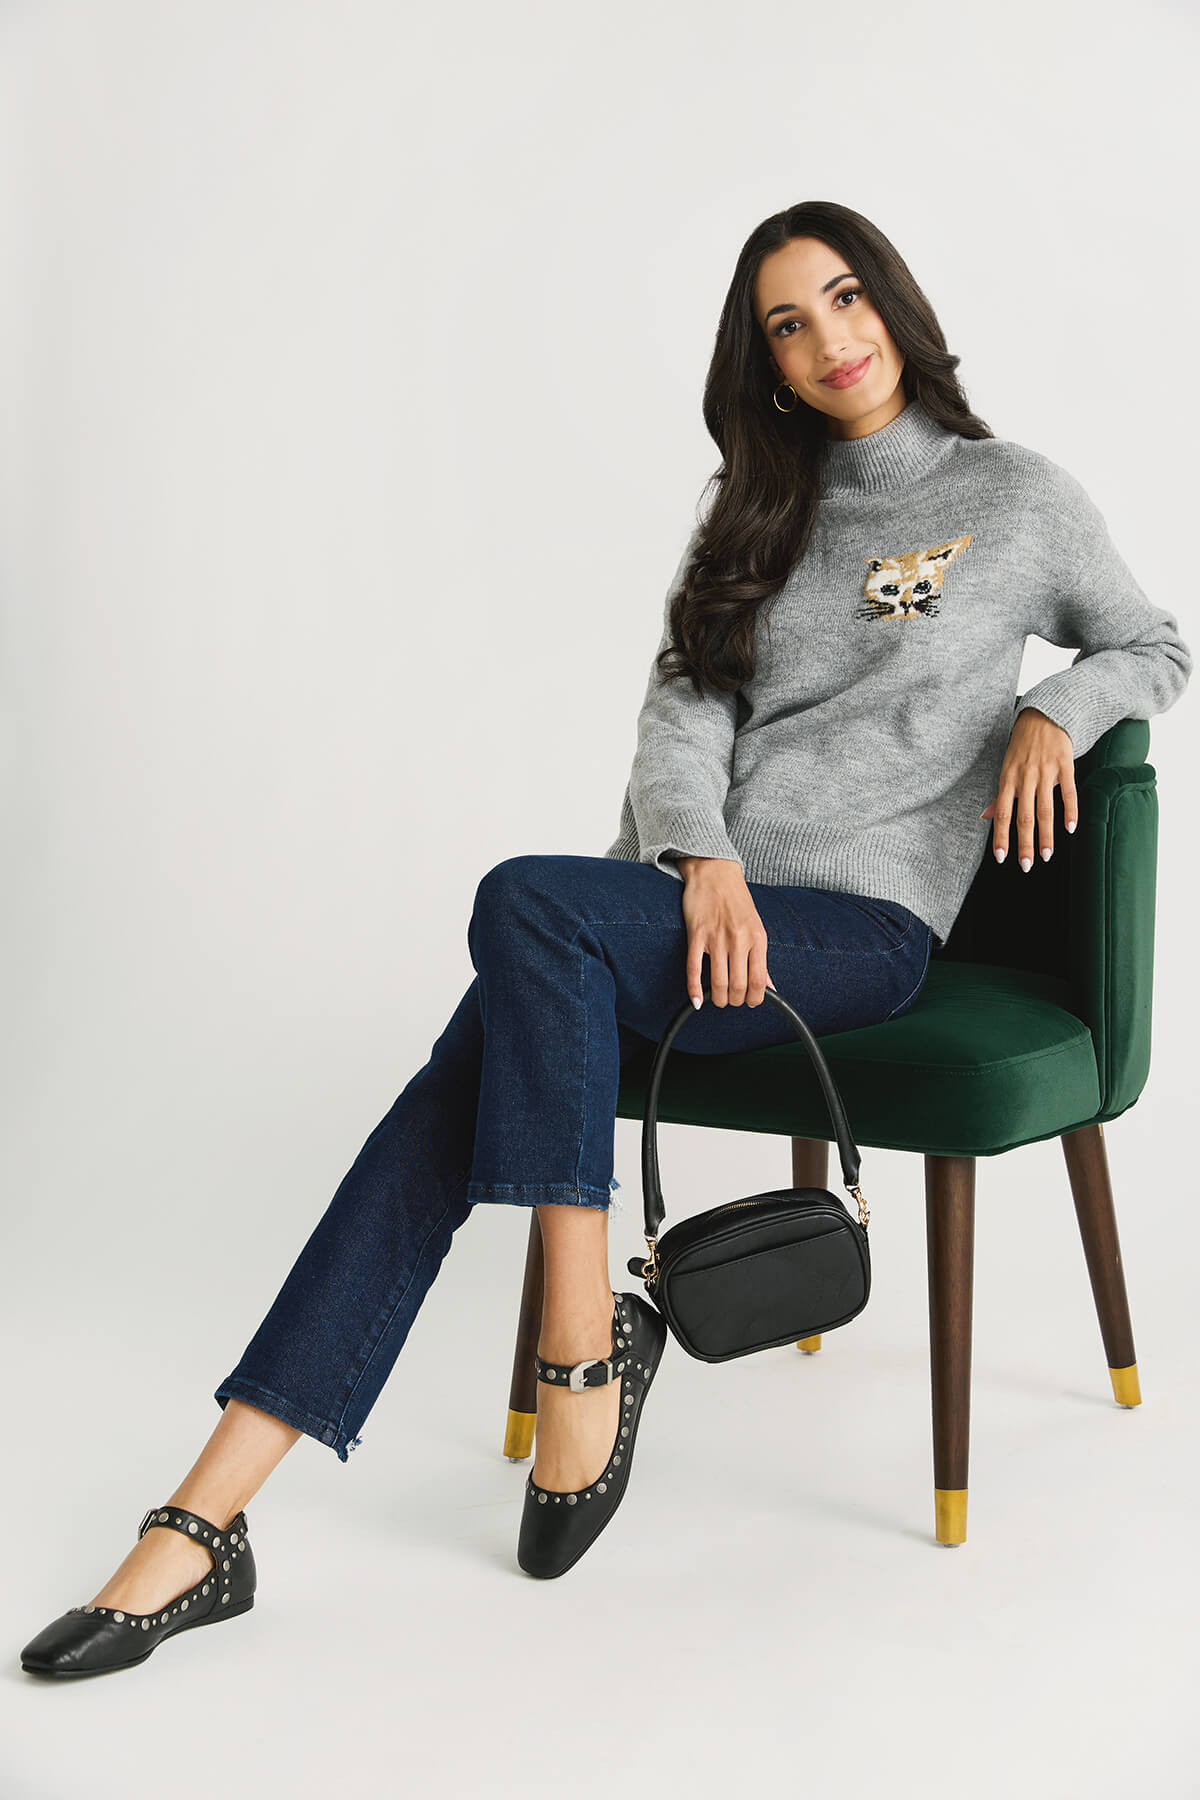 THML Perci Leopard Print Sweater - ShopperBoard